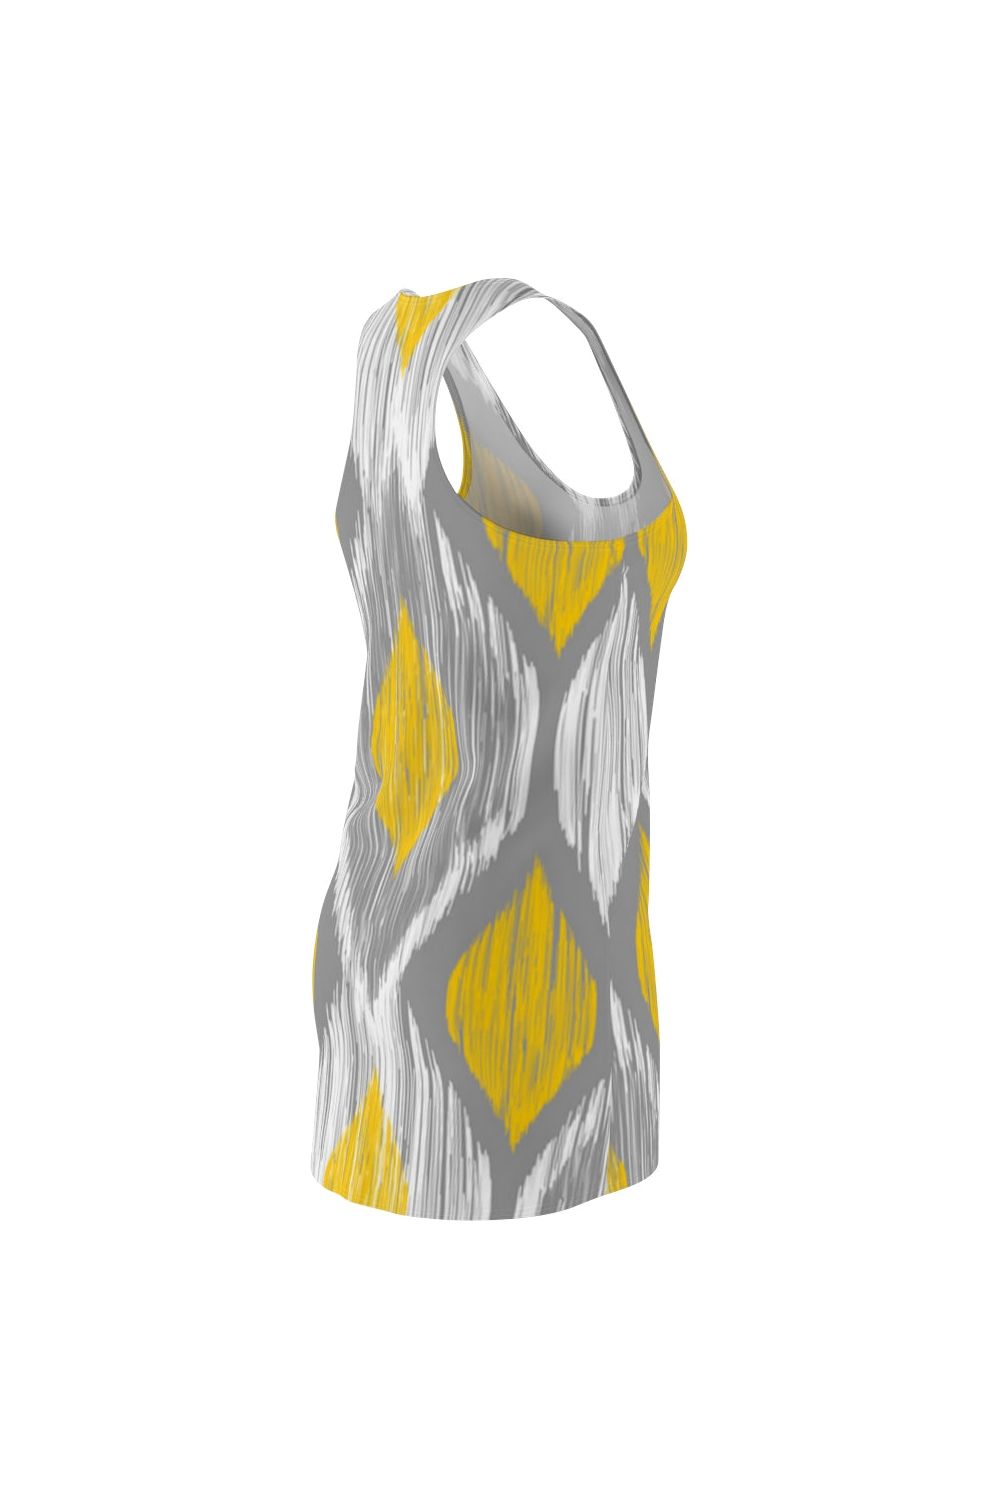 Women's Gray and Yellow Racerback Dress